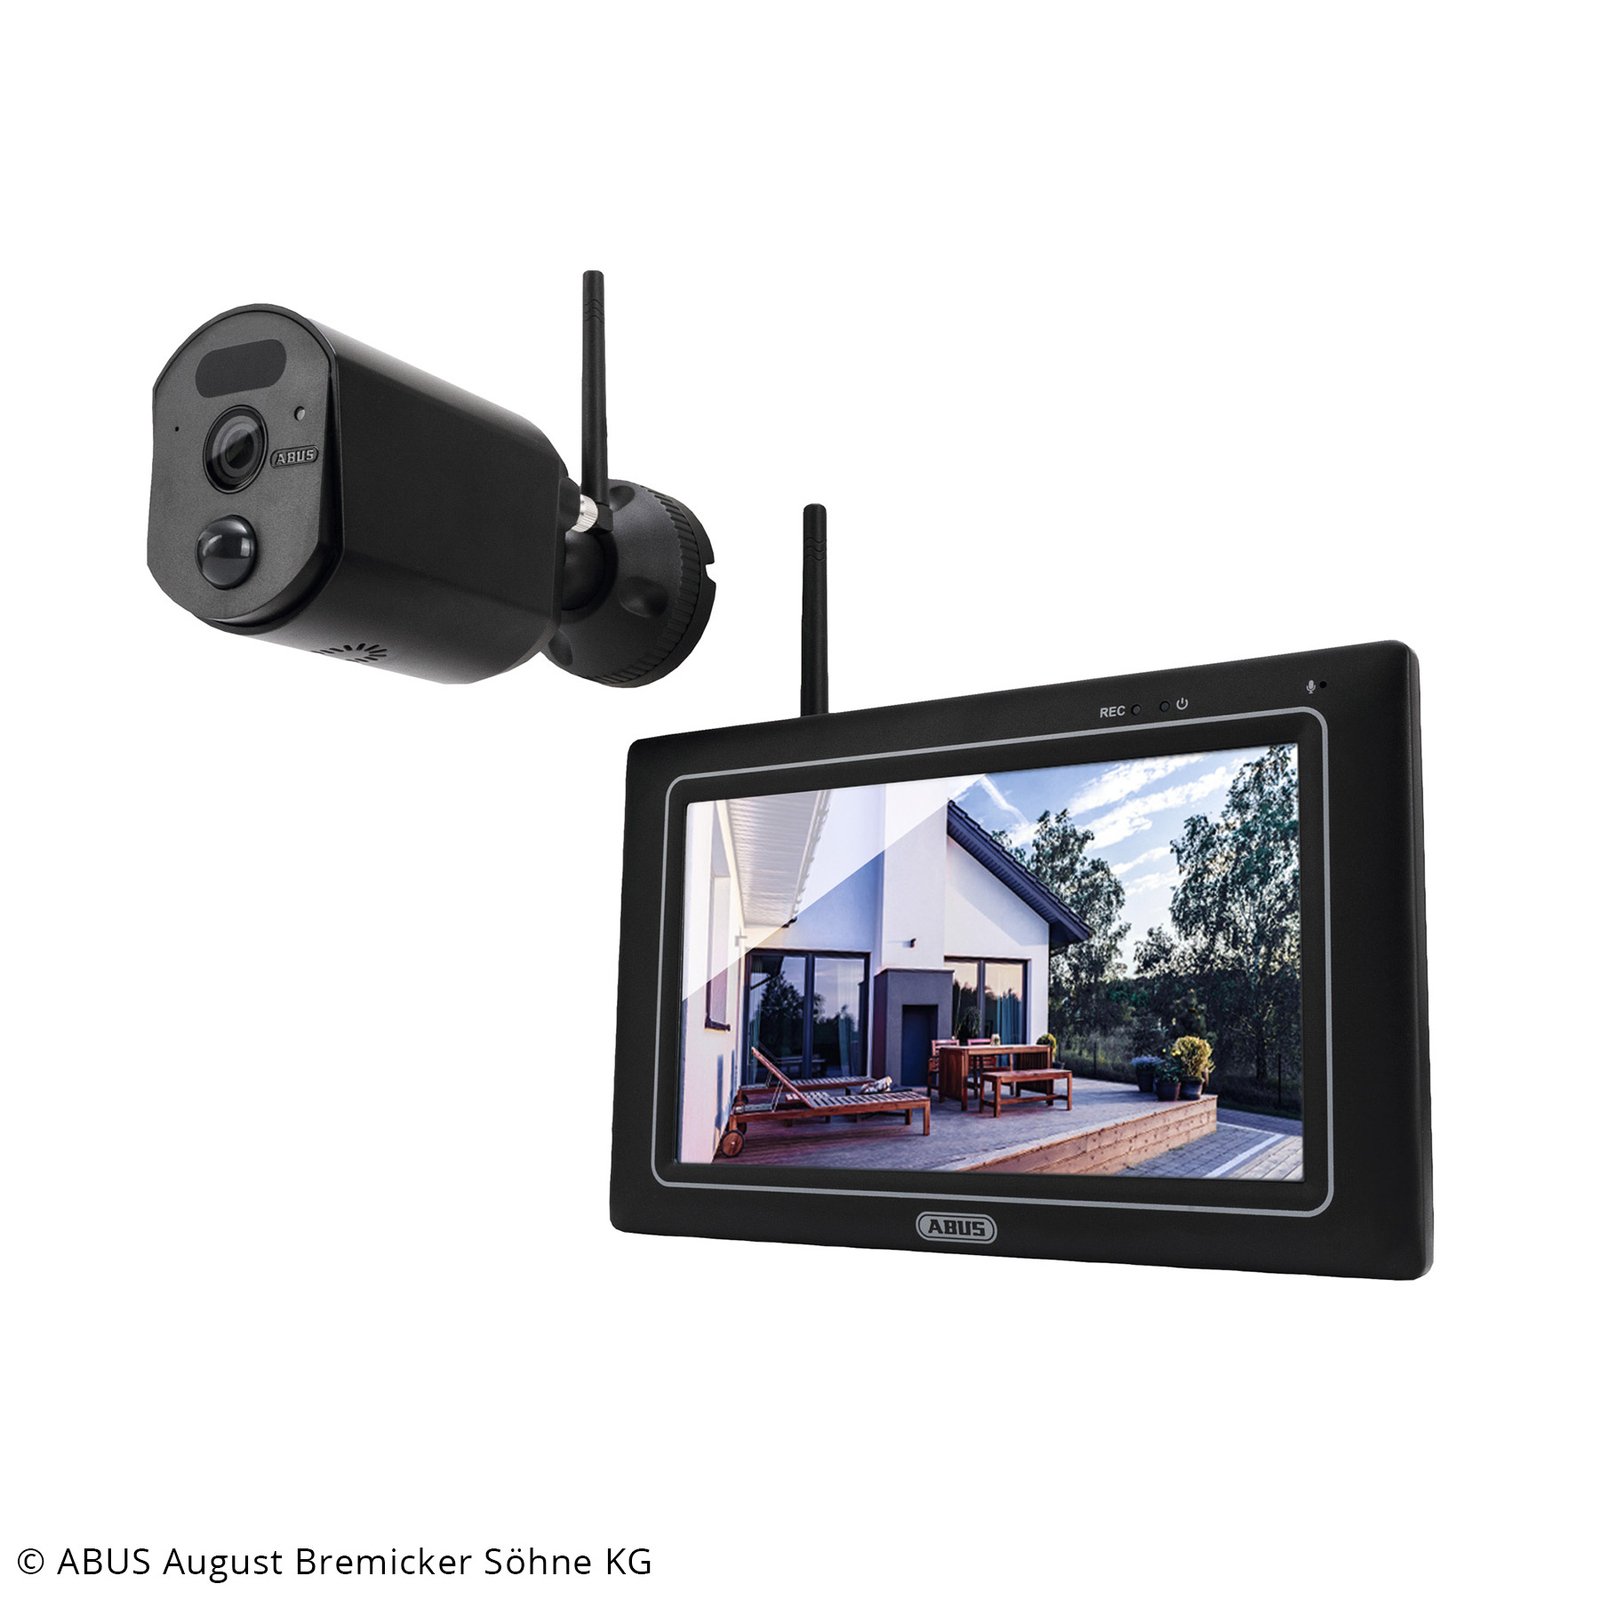 ABUS EasyLook BasicSet, camera and monitor